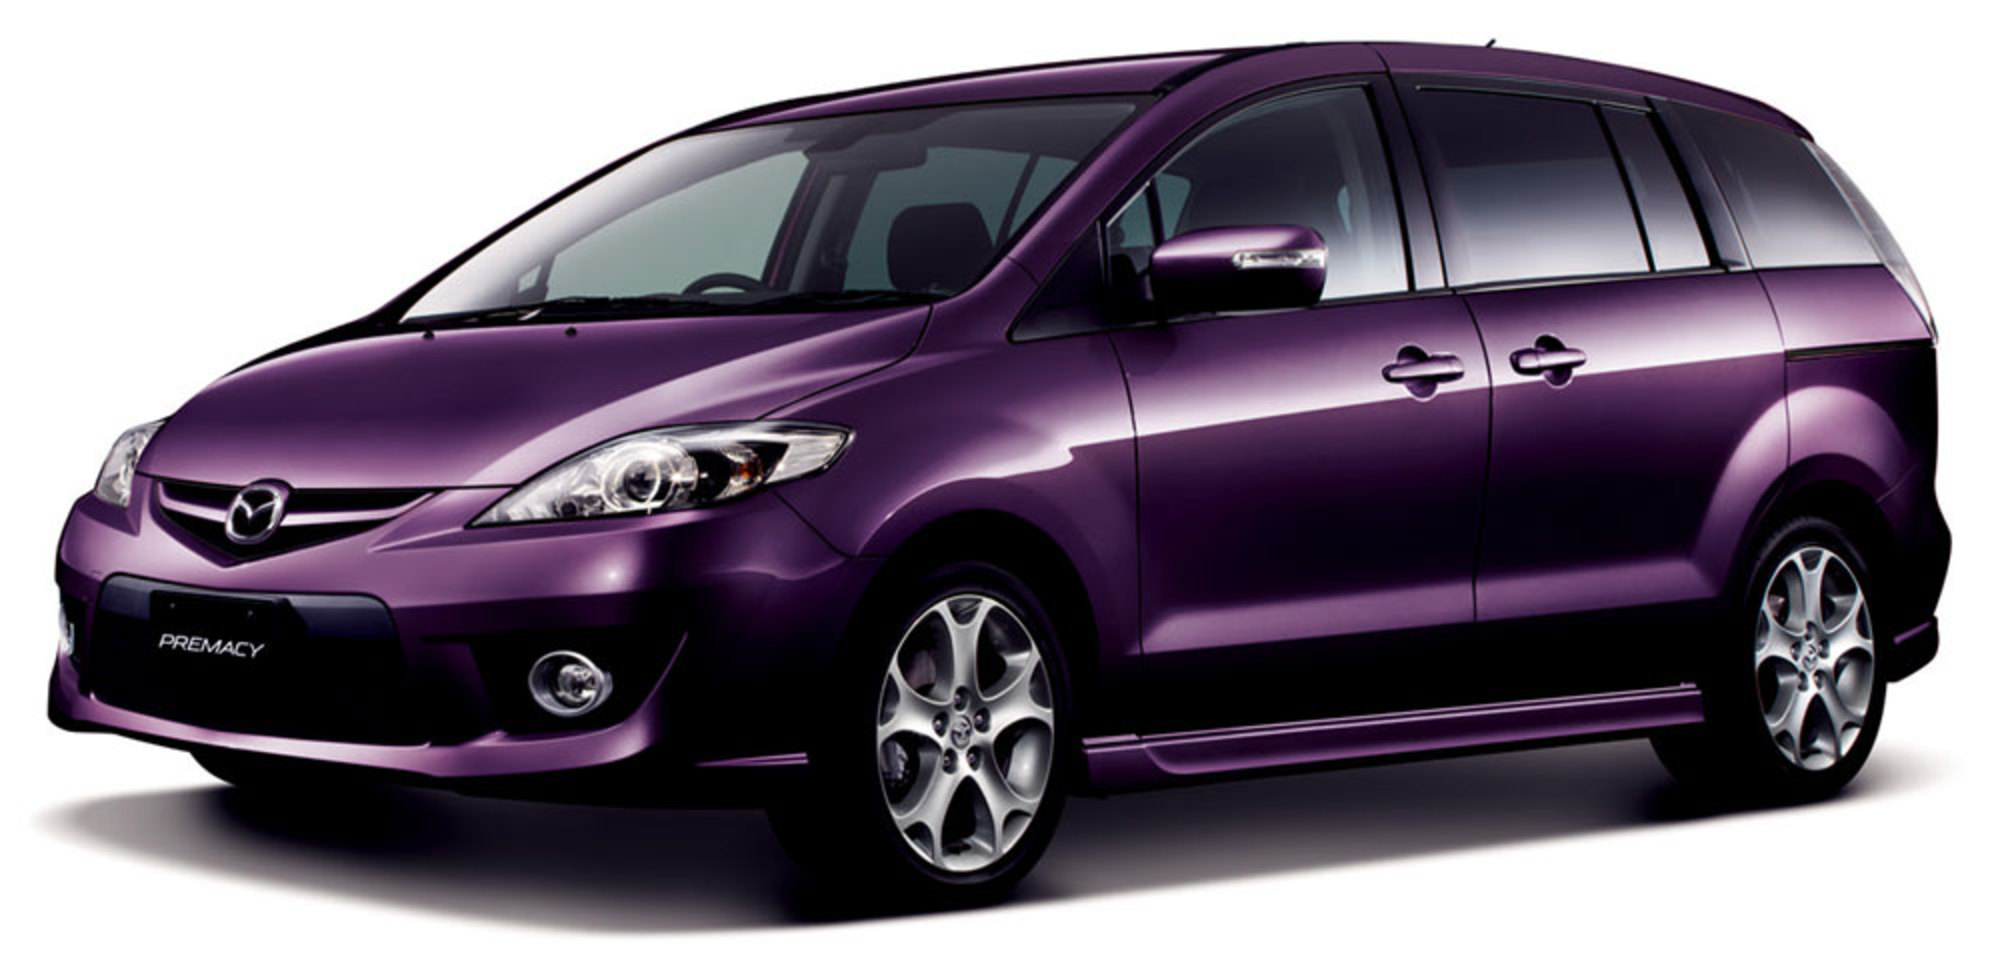 Mazda Premacy gets updated for 2010 in Japan